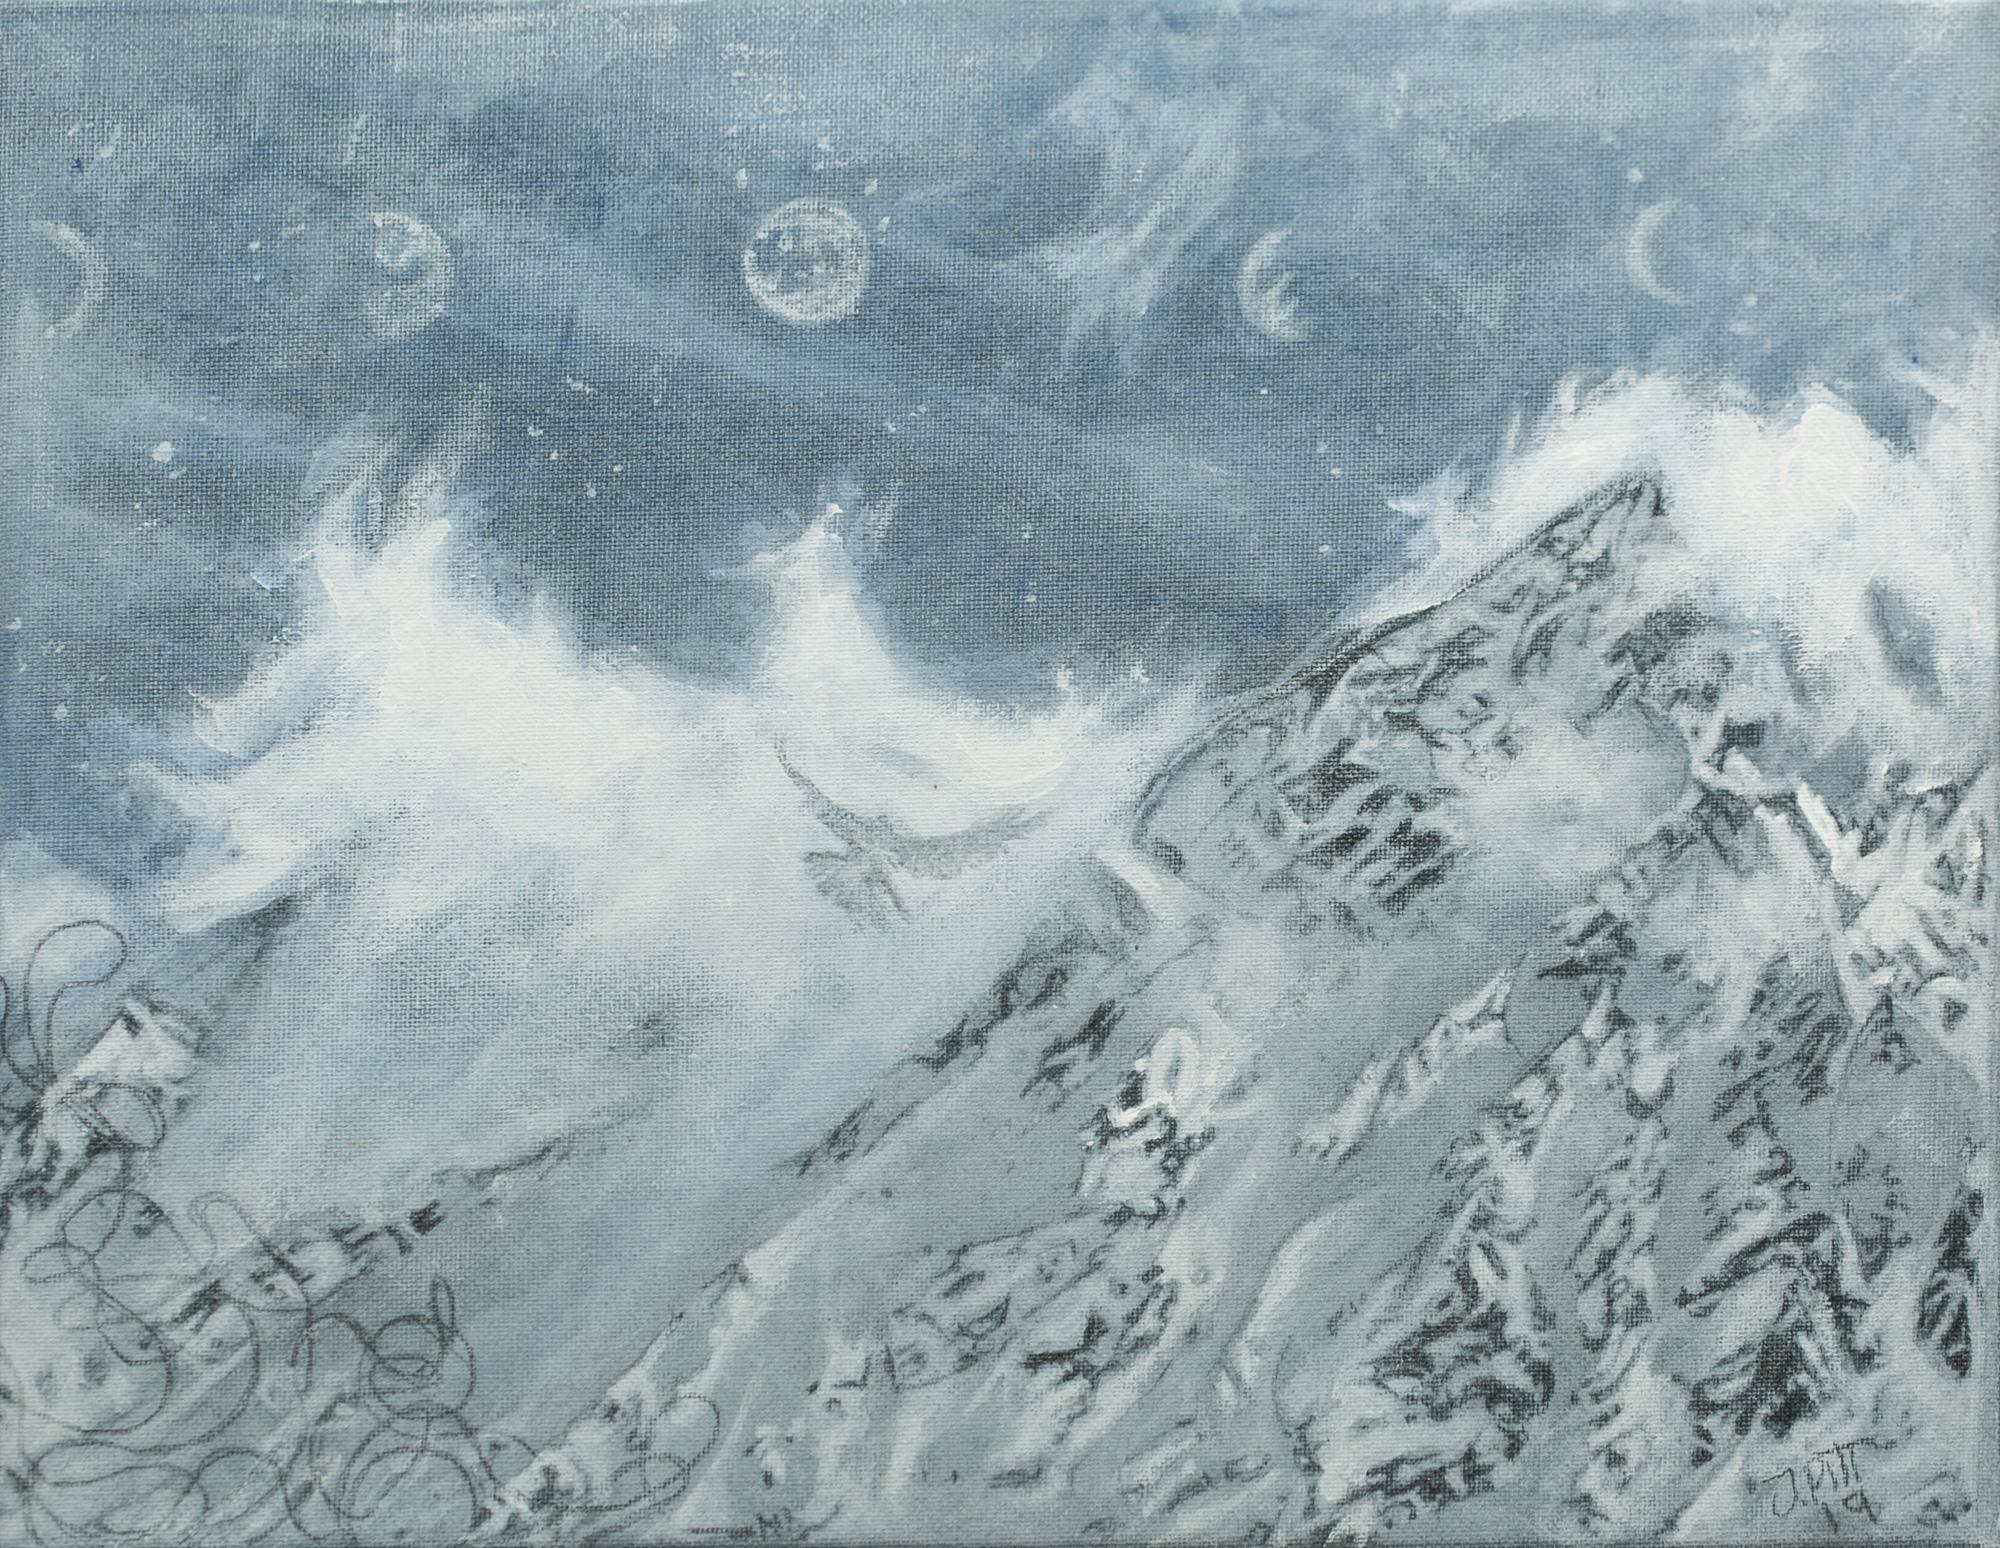 "Time", Snowy, Mountain, Landscape, Blue and Grey Tones, Snowscape